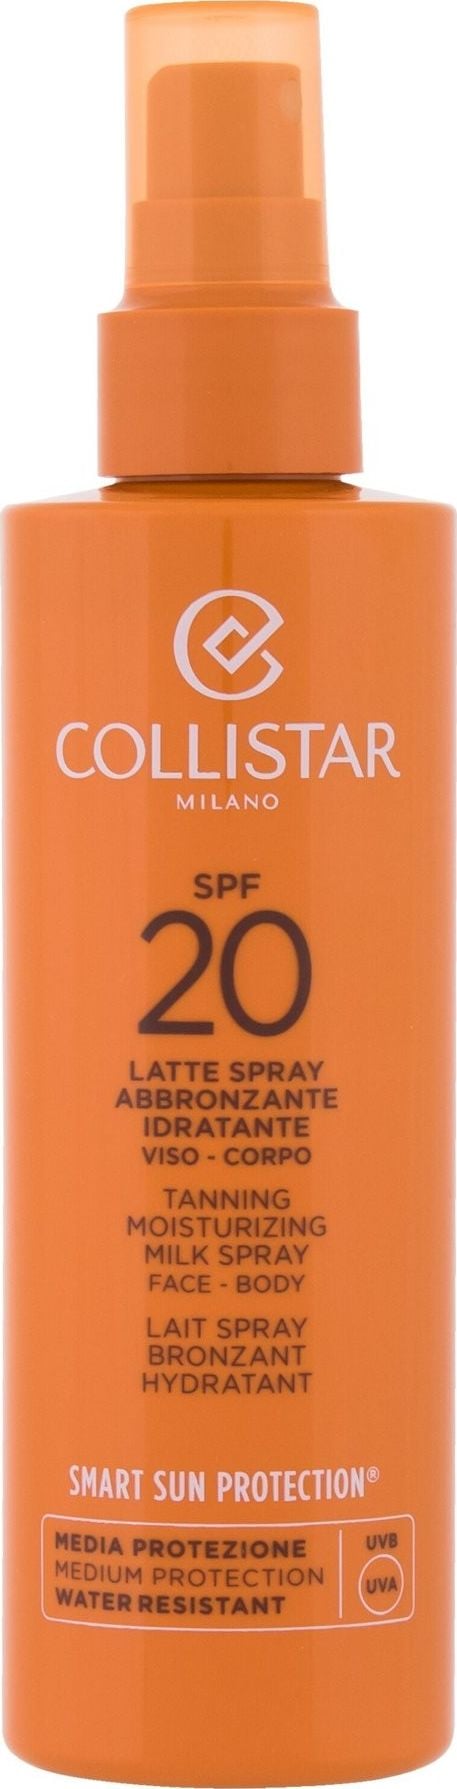 Spray cu protectie solara Collistar SPF 20, 200ml